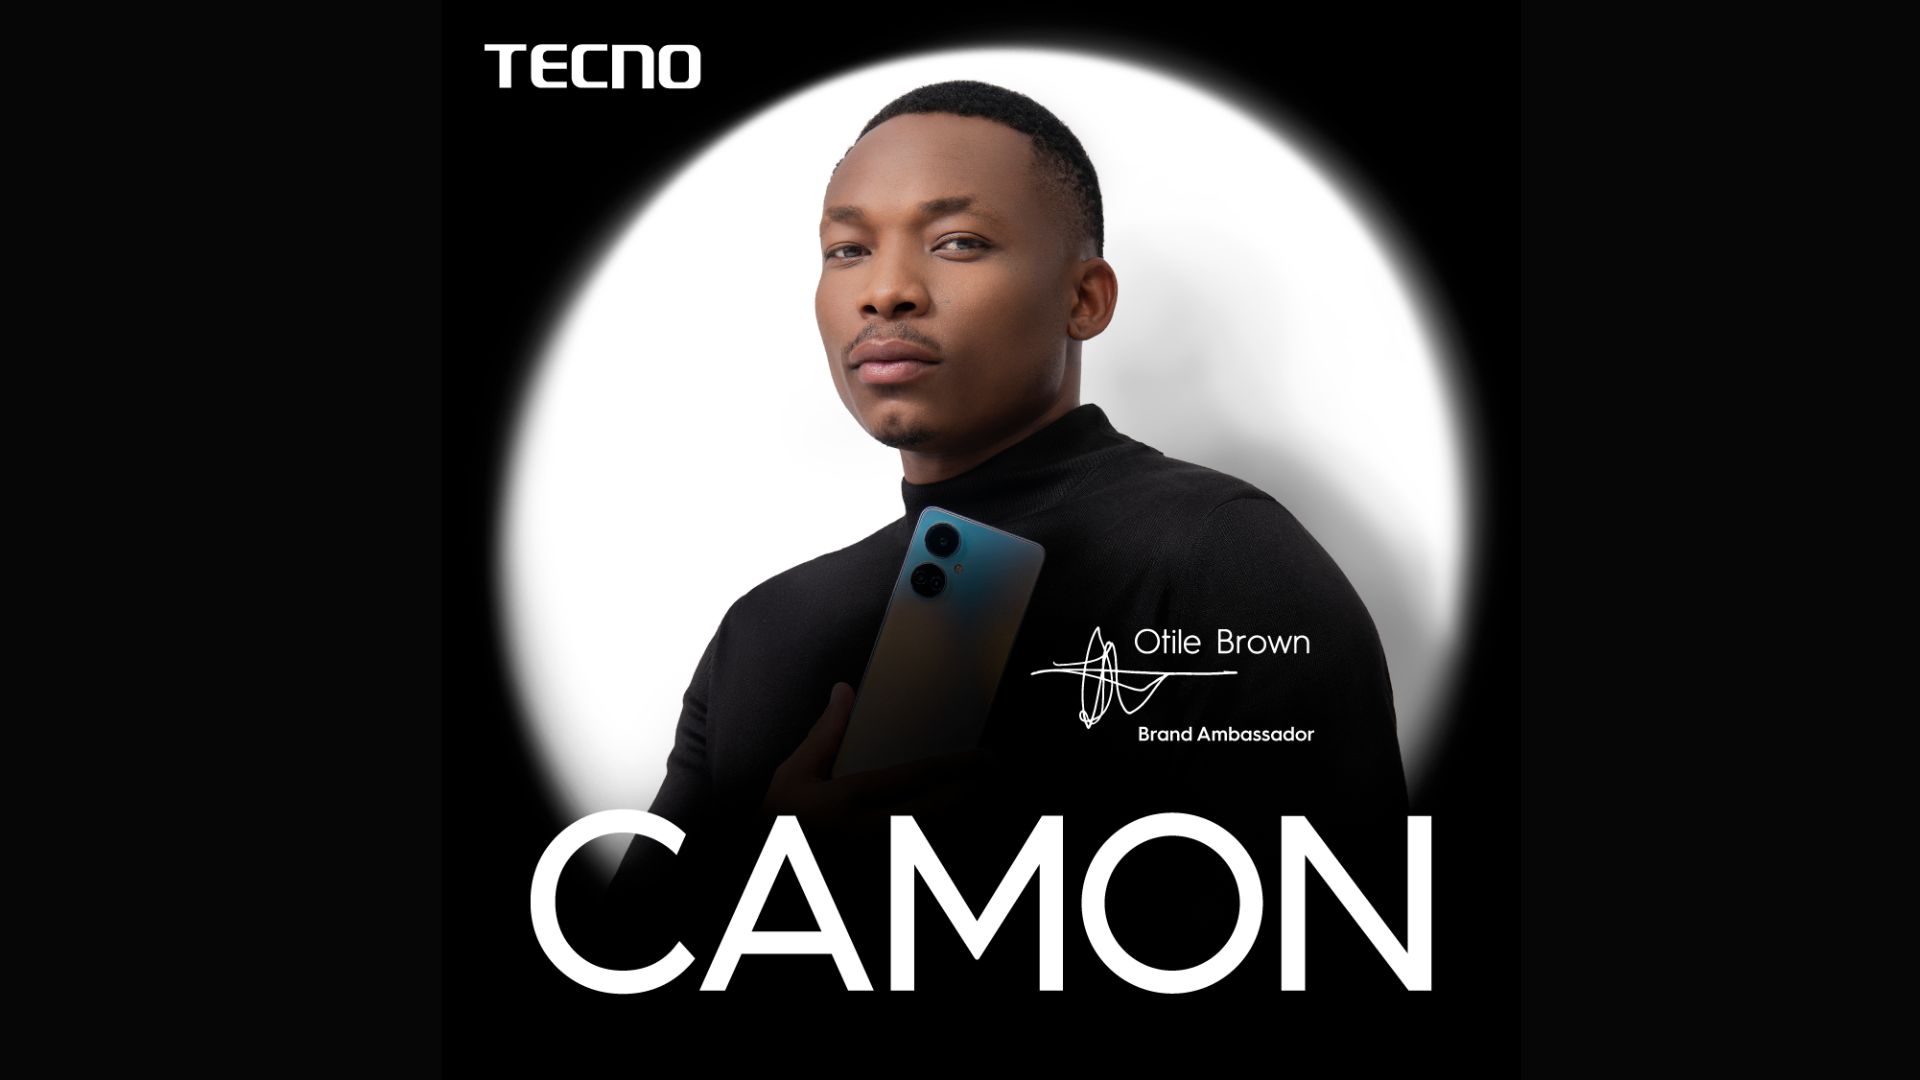 Otile Brown named TECNO Chief Creative Officer headlining Camon 19 Series